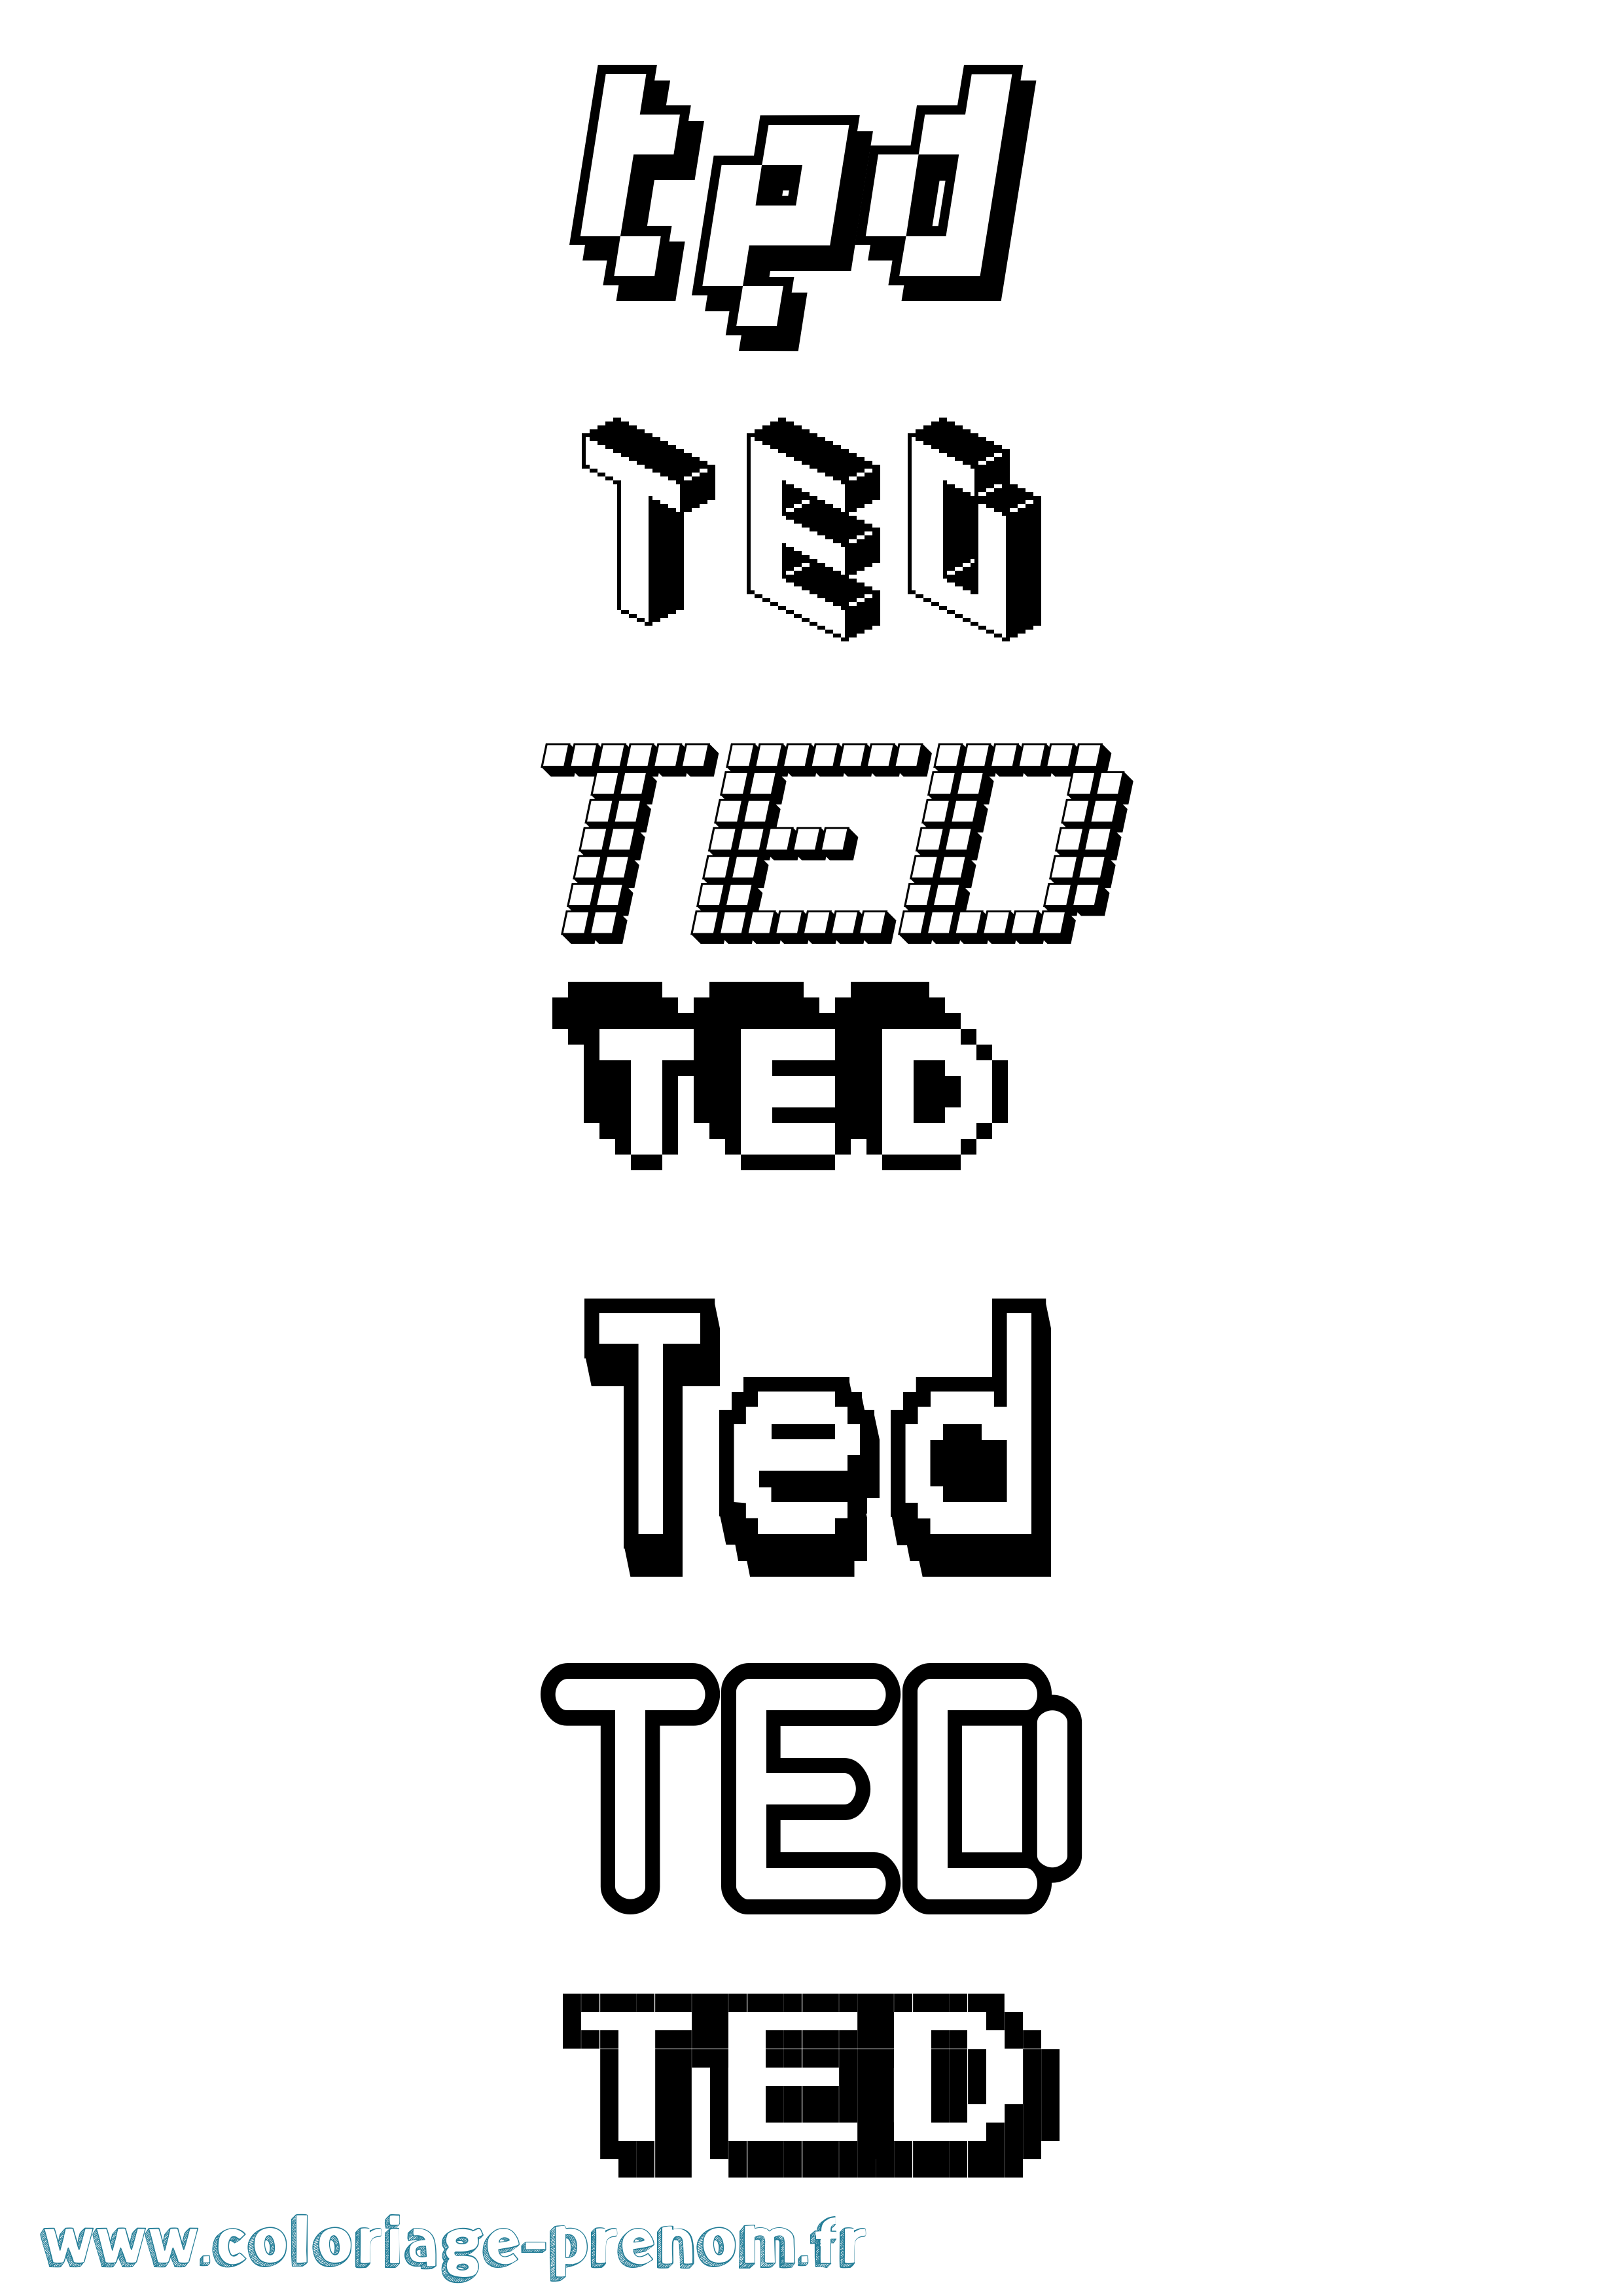 Coloriage prénom Ted Pixel